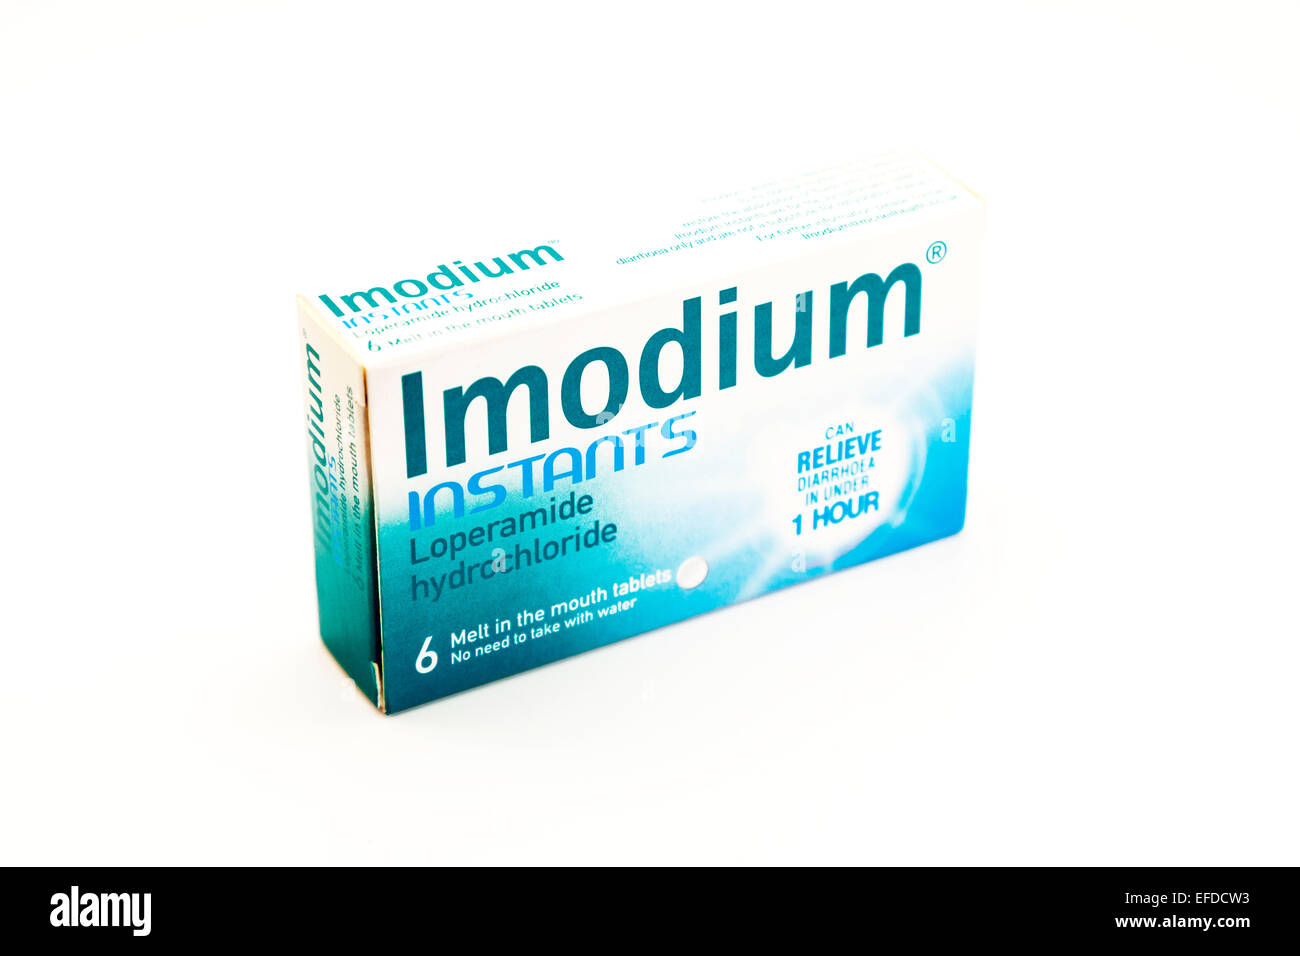 Imodium instants tablets diarrhoea  diarrhea remedy cure relief relieve help runs medicine cut out copy space antidiarrheal drug Stock Photo